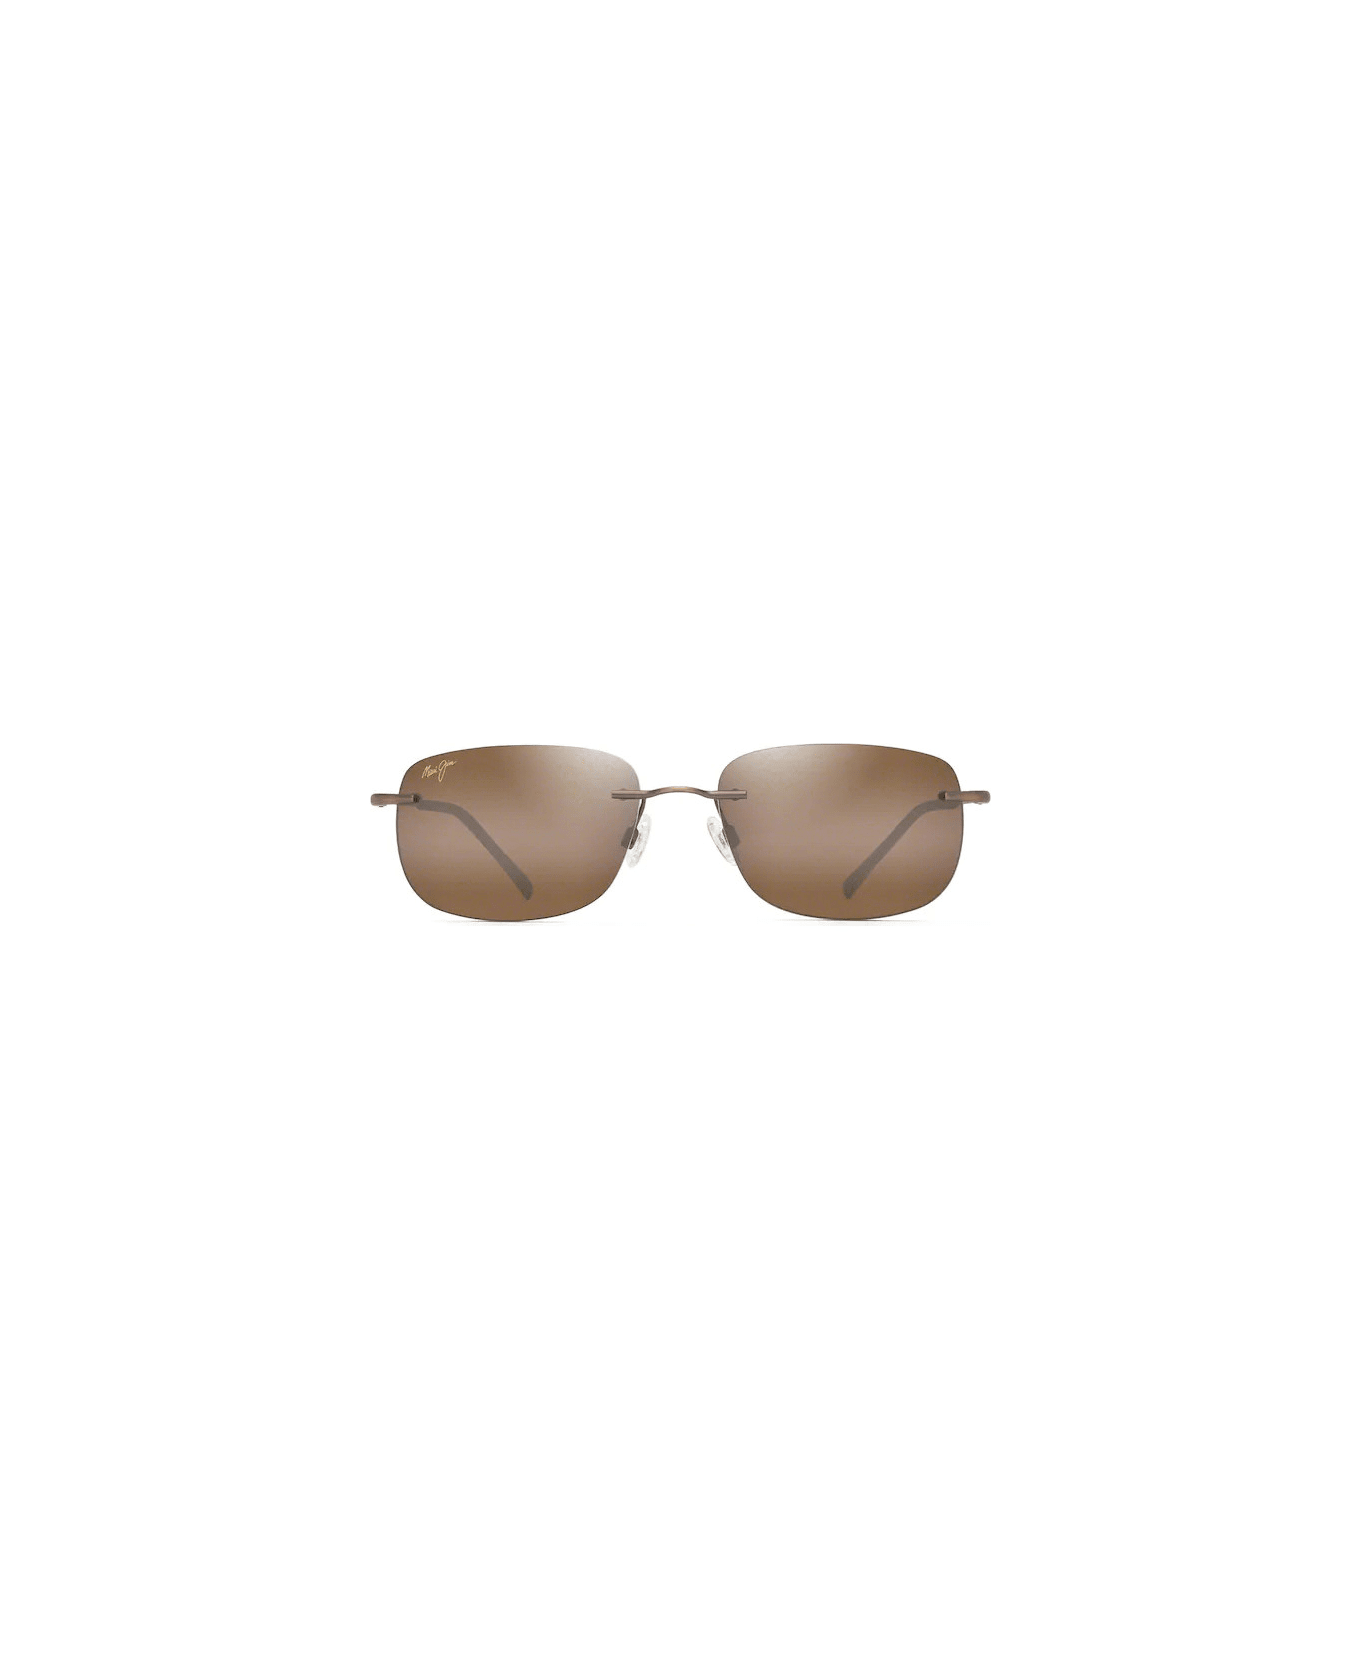 Maui Jim H334-18 Sunglasses - Rame サングラス